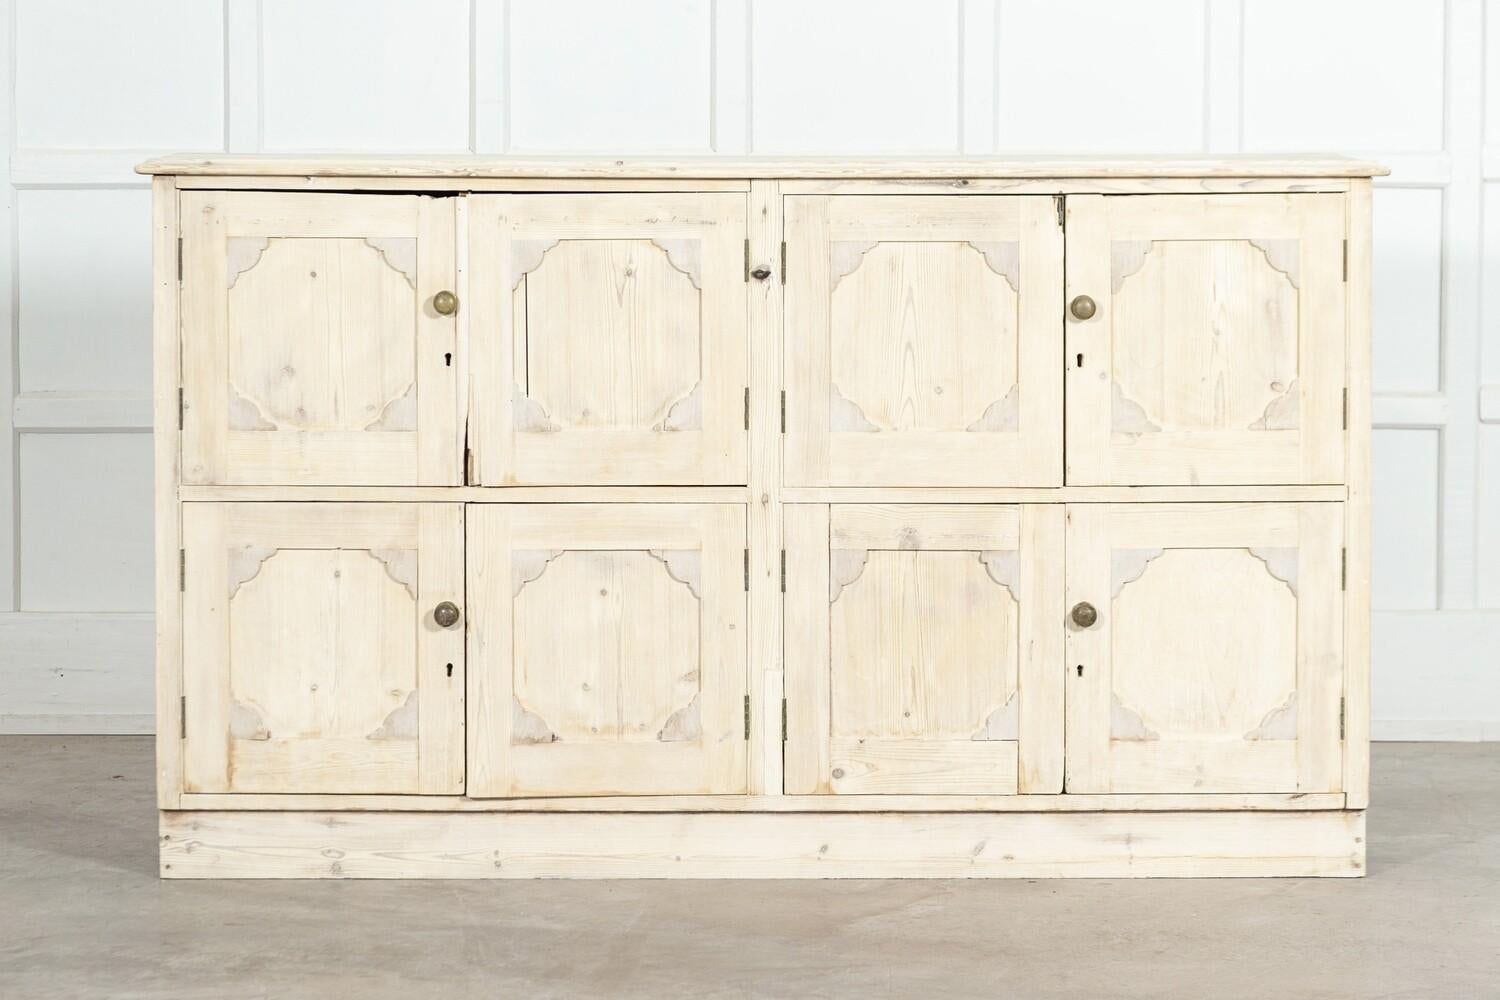 circa 1890
Large English Bleached Pine Locker Cabinet
sku 1549
W174 x D43 x H100 cm